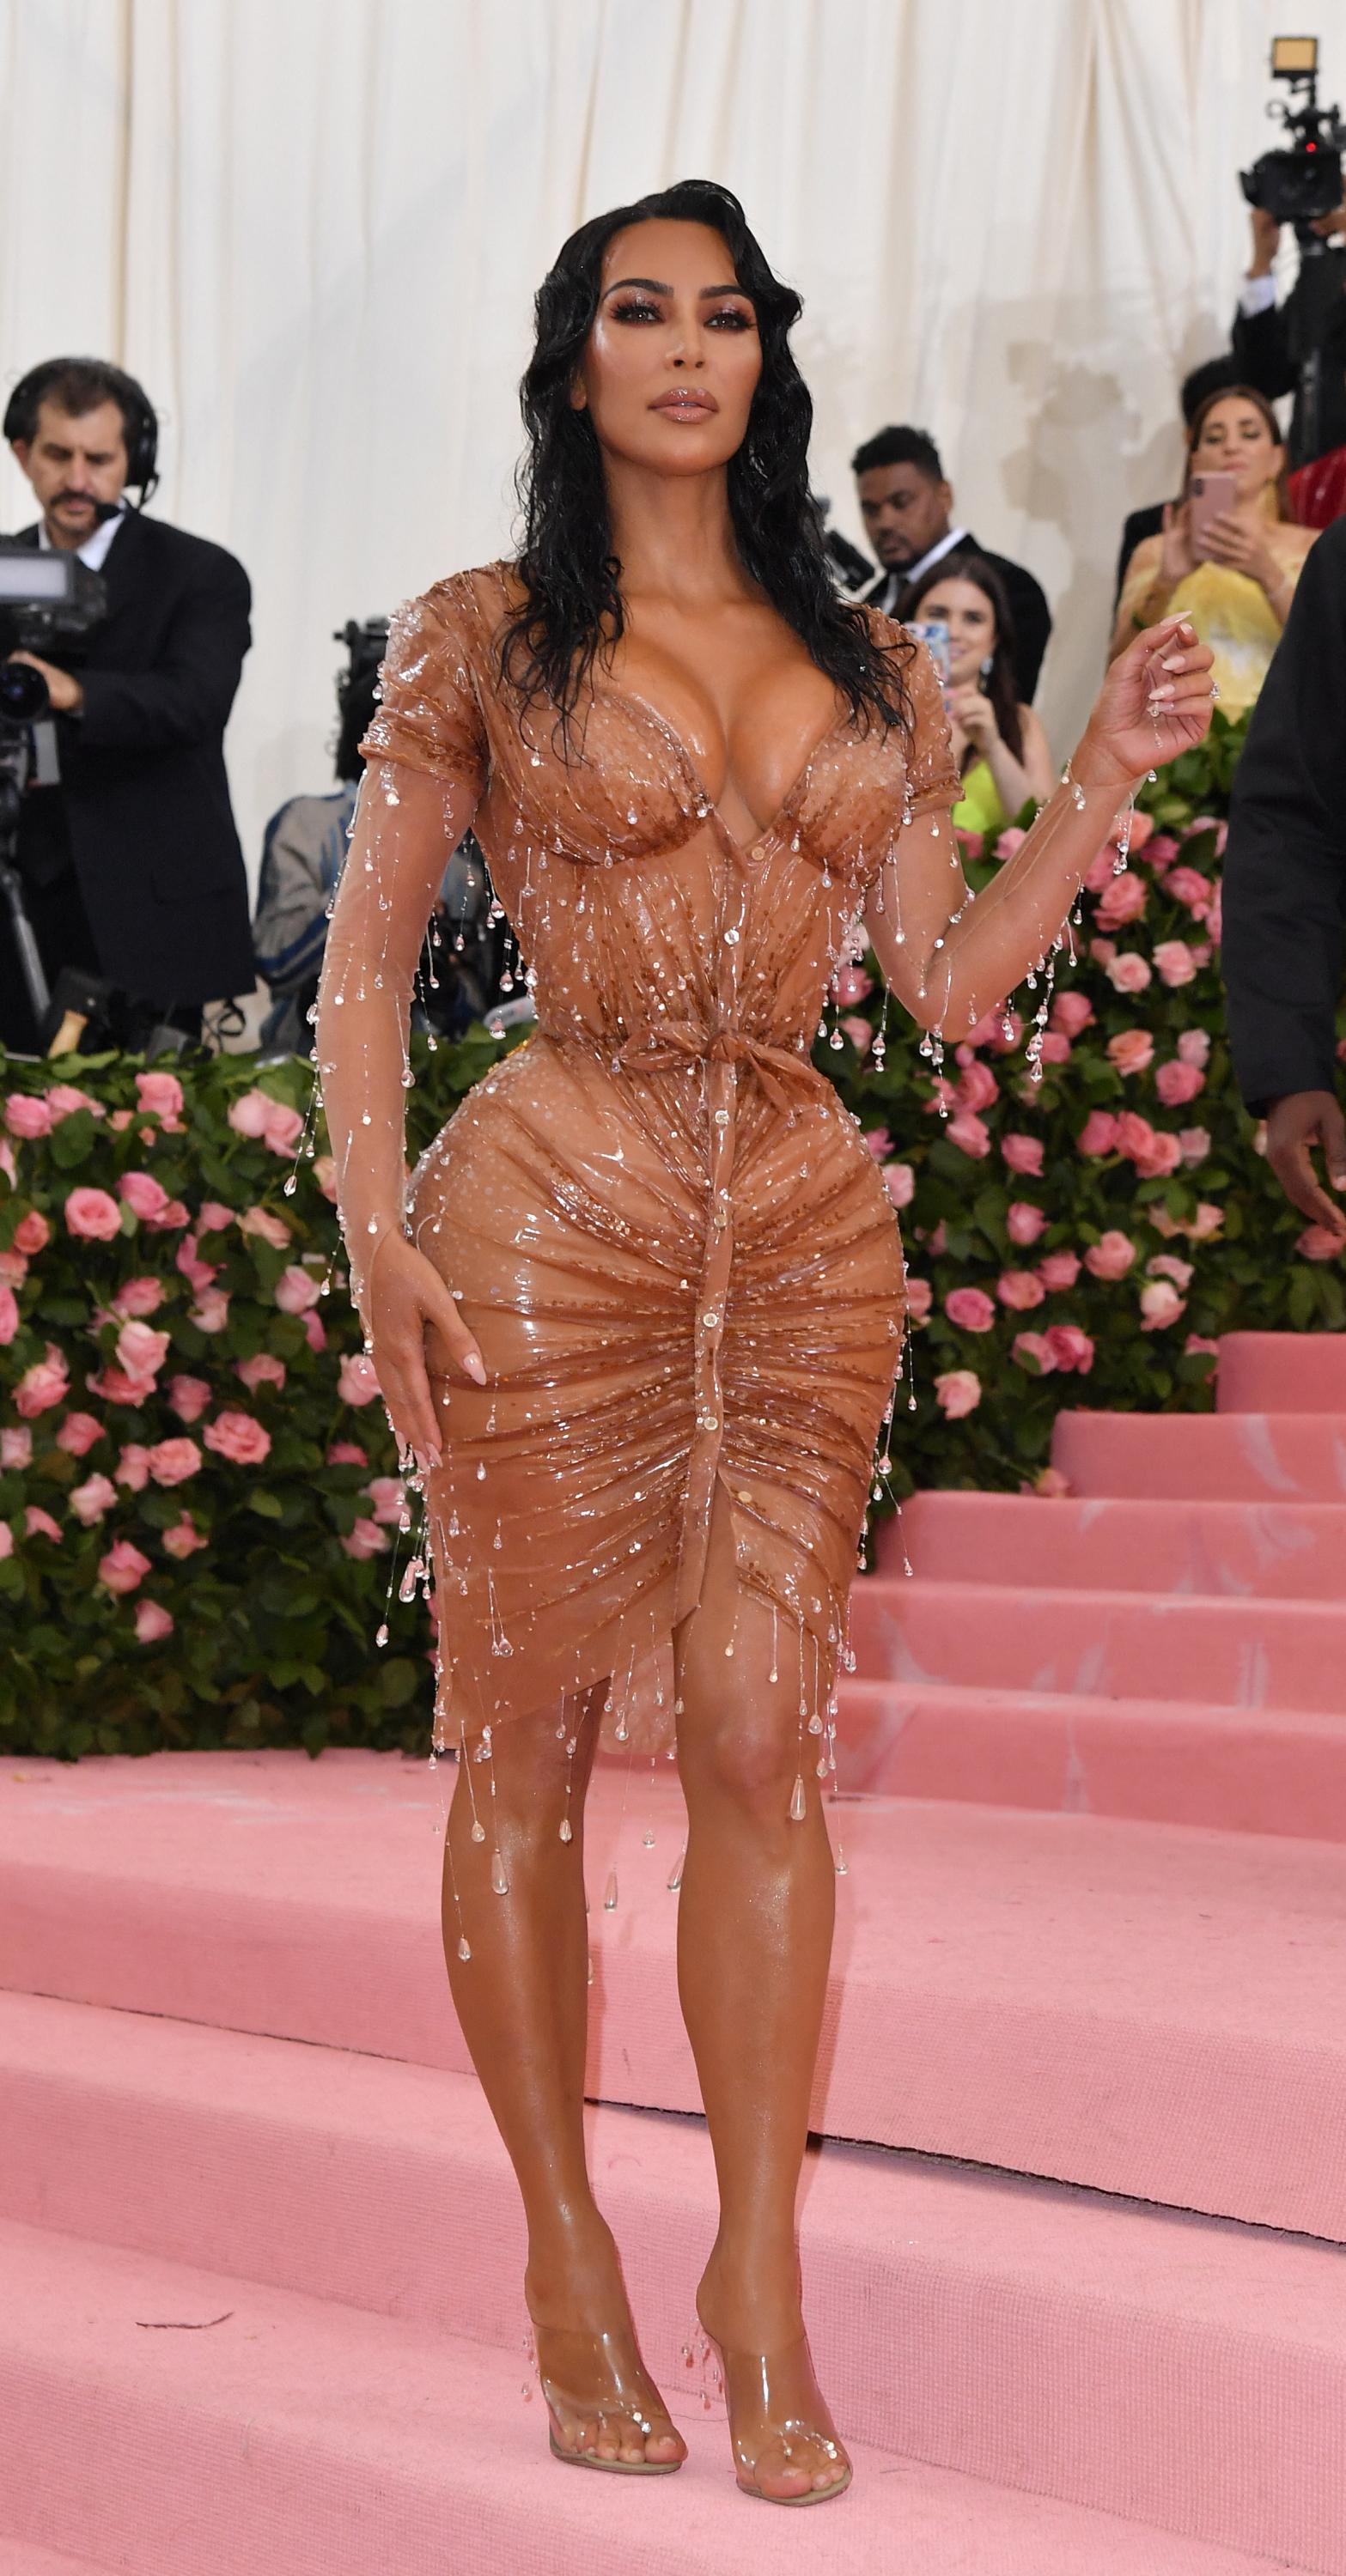 «elle a visiblement du mal à respirer» : kim kardashian et son corset ultraserré interpellent au met gala